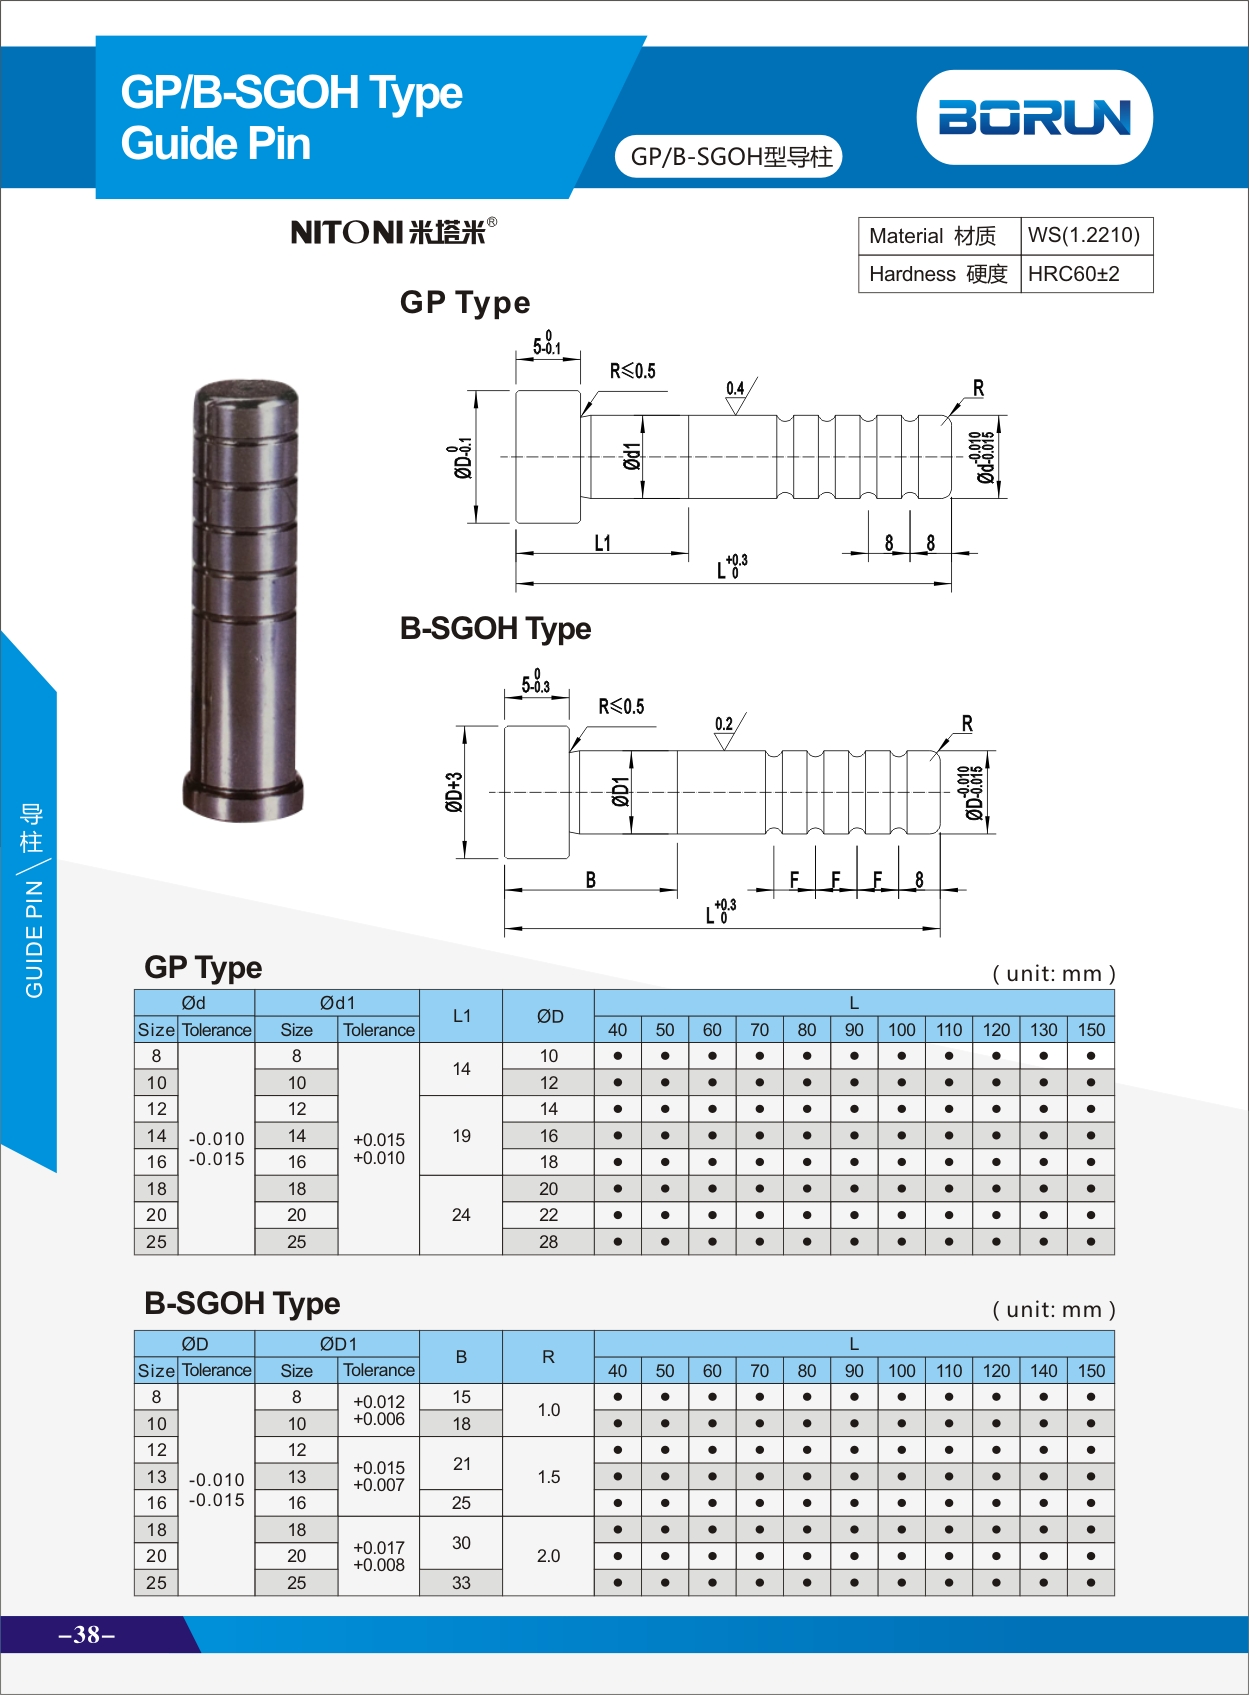 GBP/B-SGPH Type Guide Pin